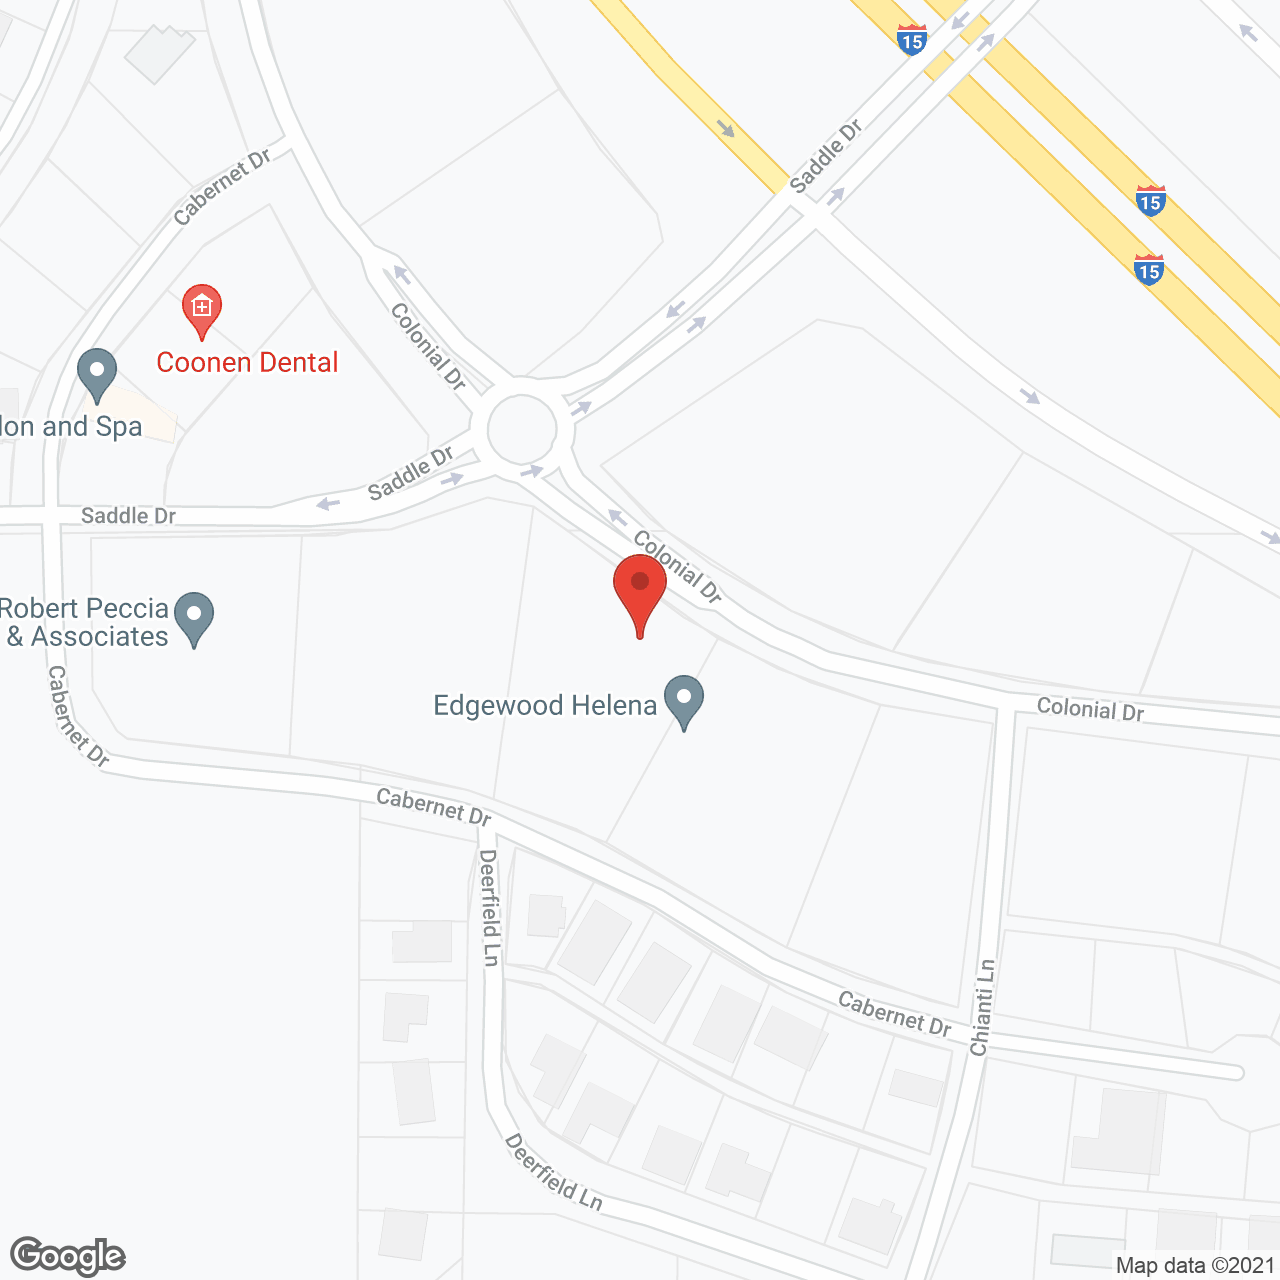 Edgewood in Helena in google map